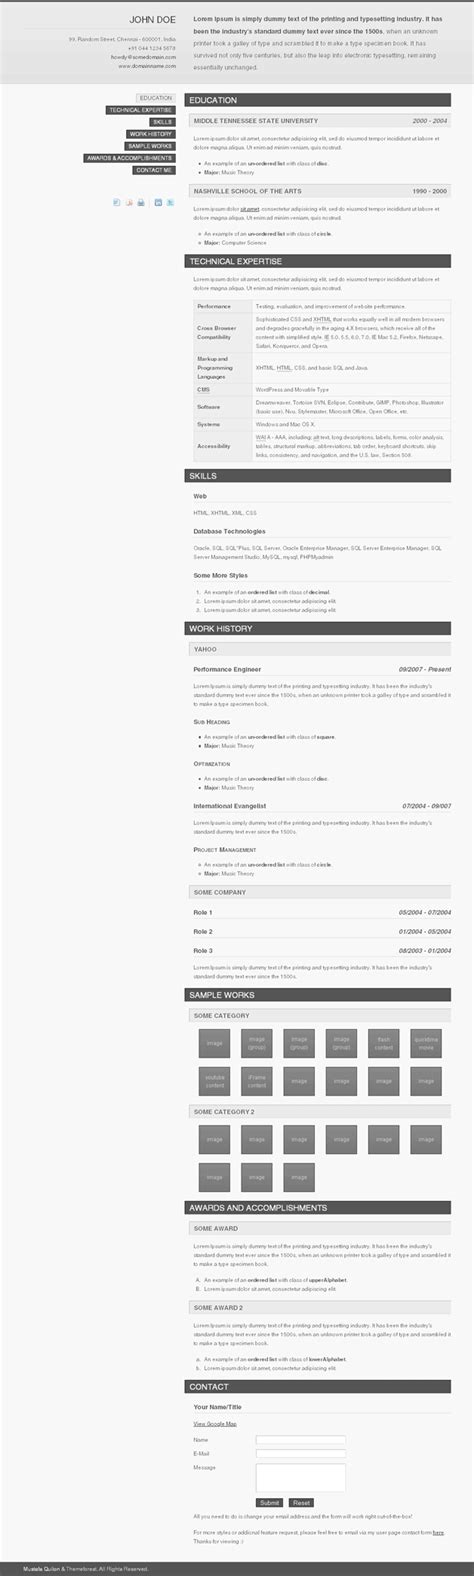 html resume templates